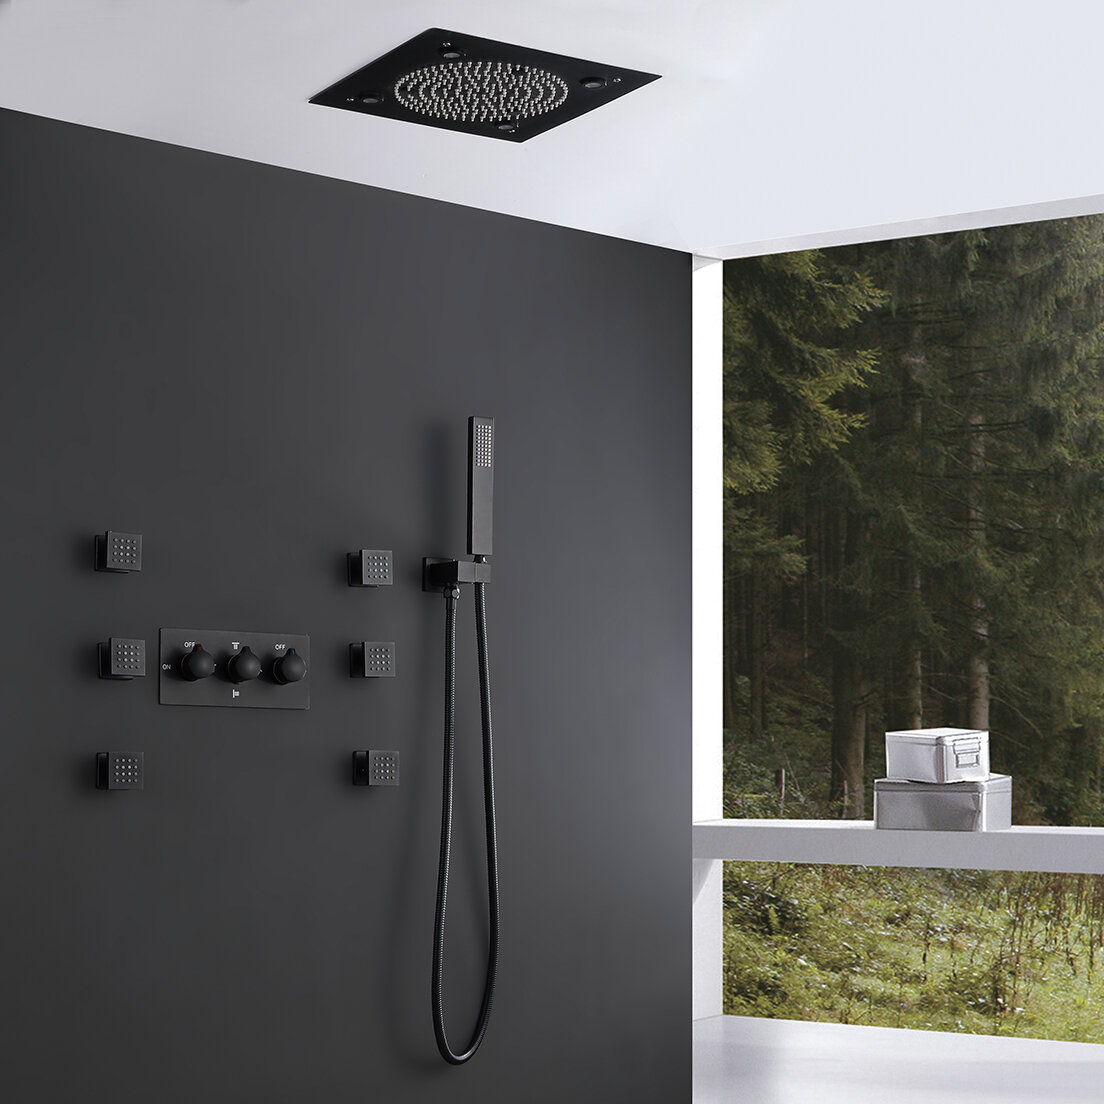 Bathroom Ulta-thin Shower Sets Square Rainfall Shower Head Taps Control Value